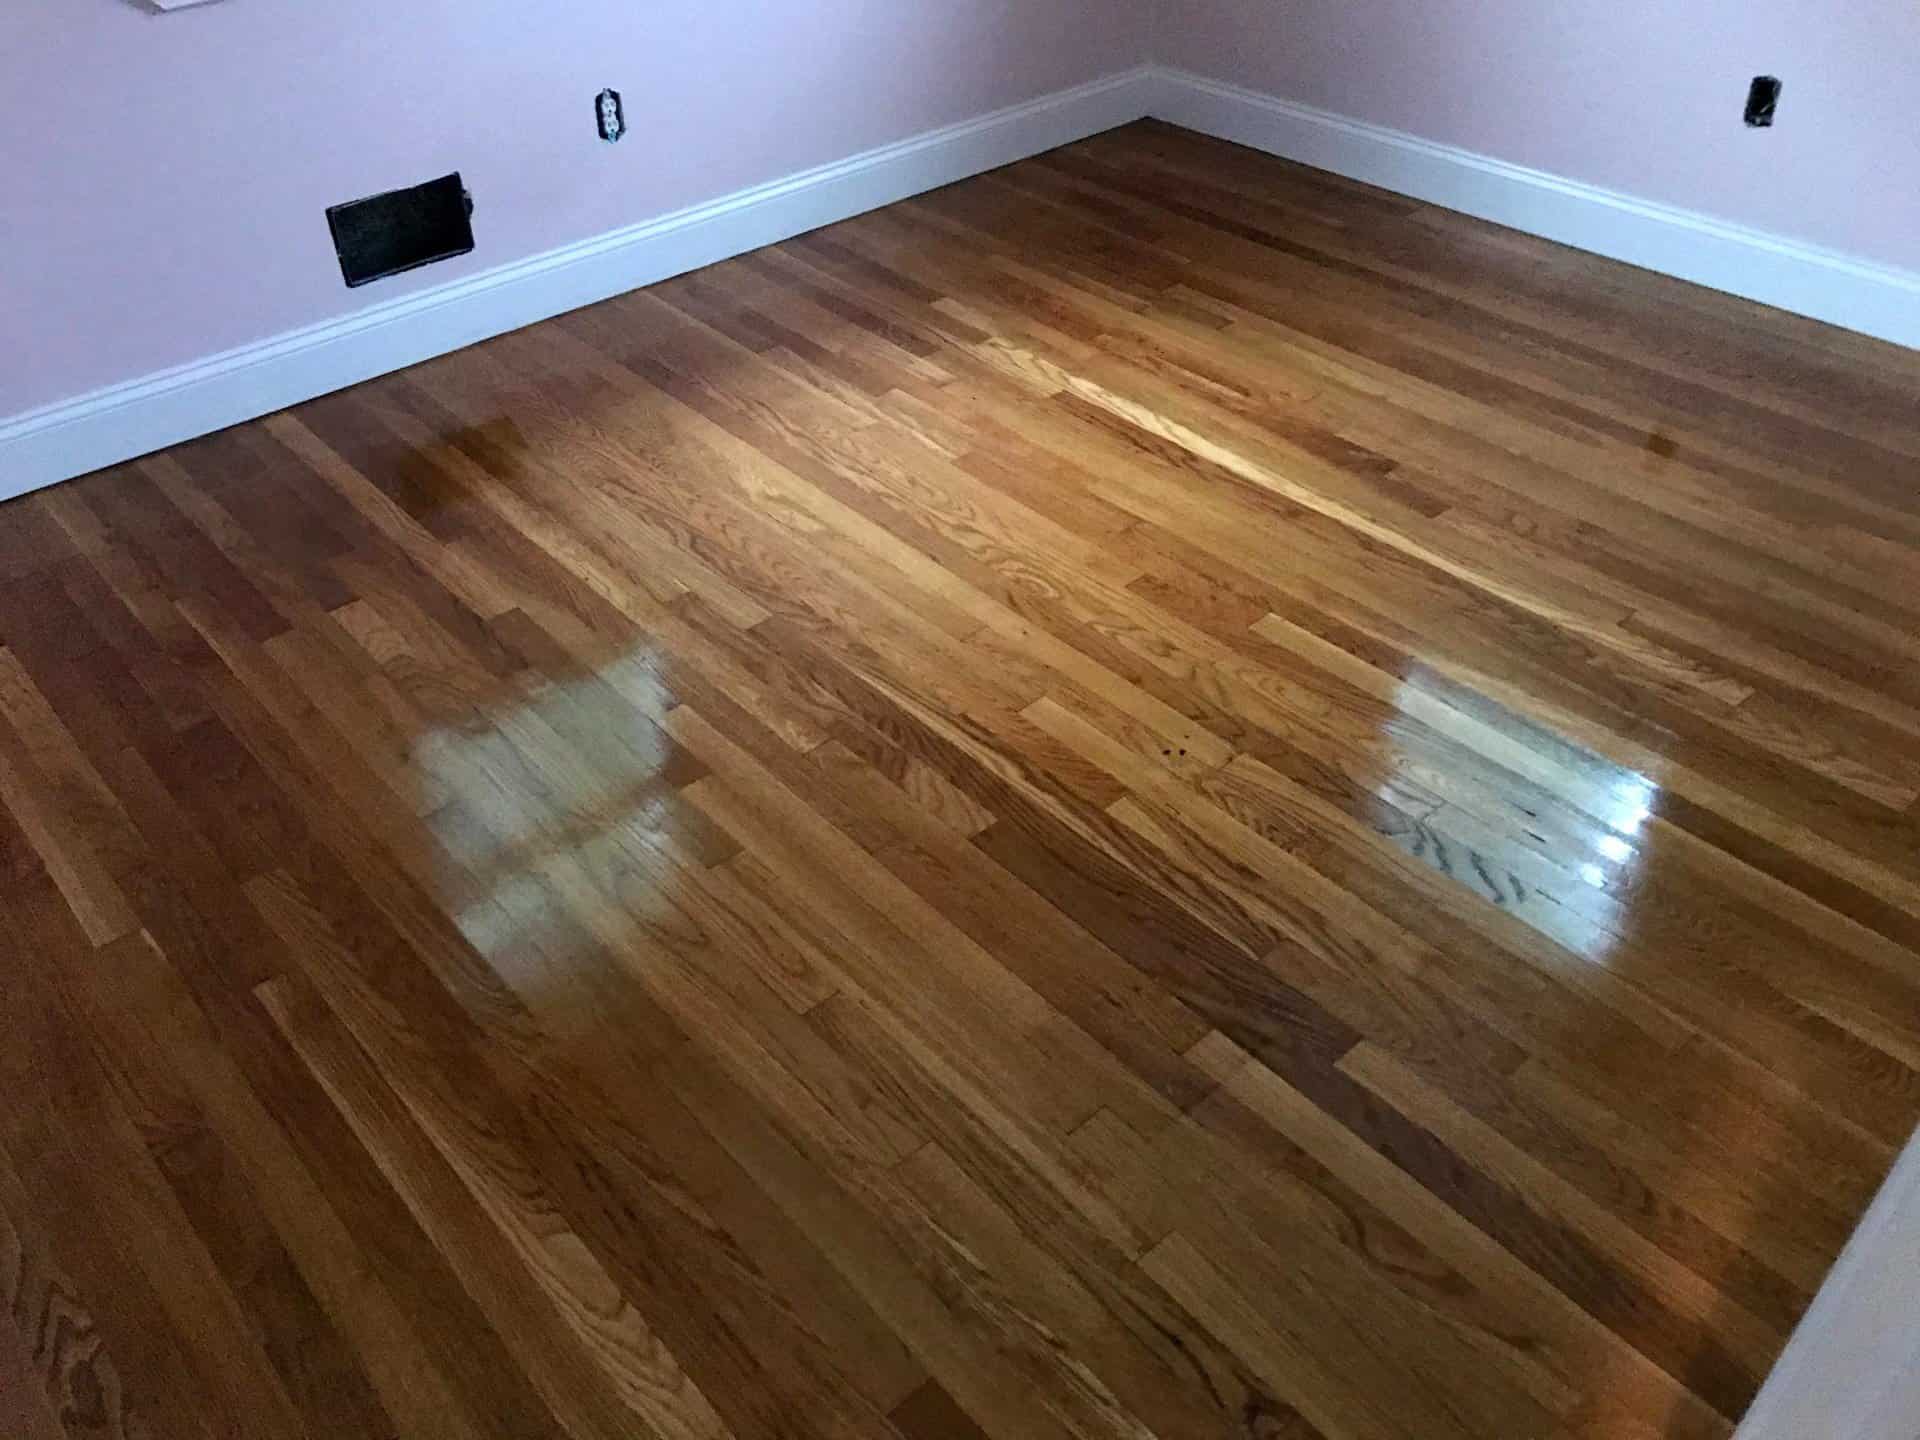 Shiny wooden floors